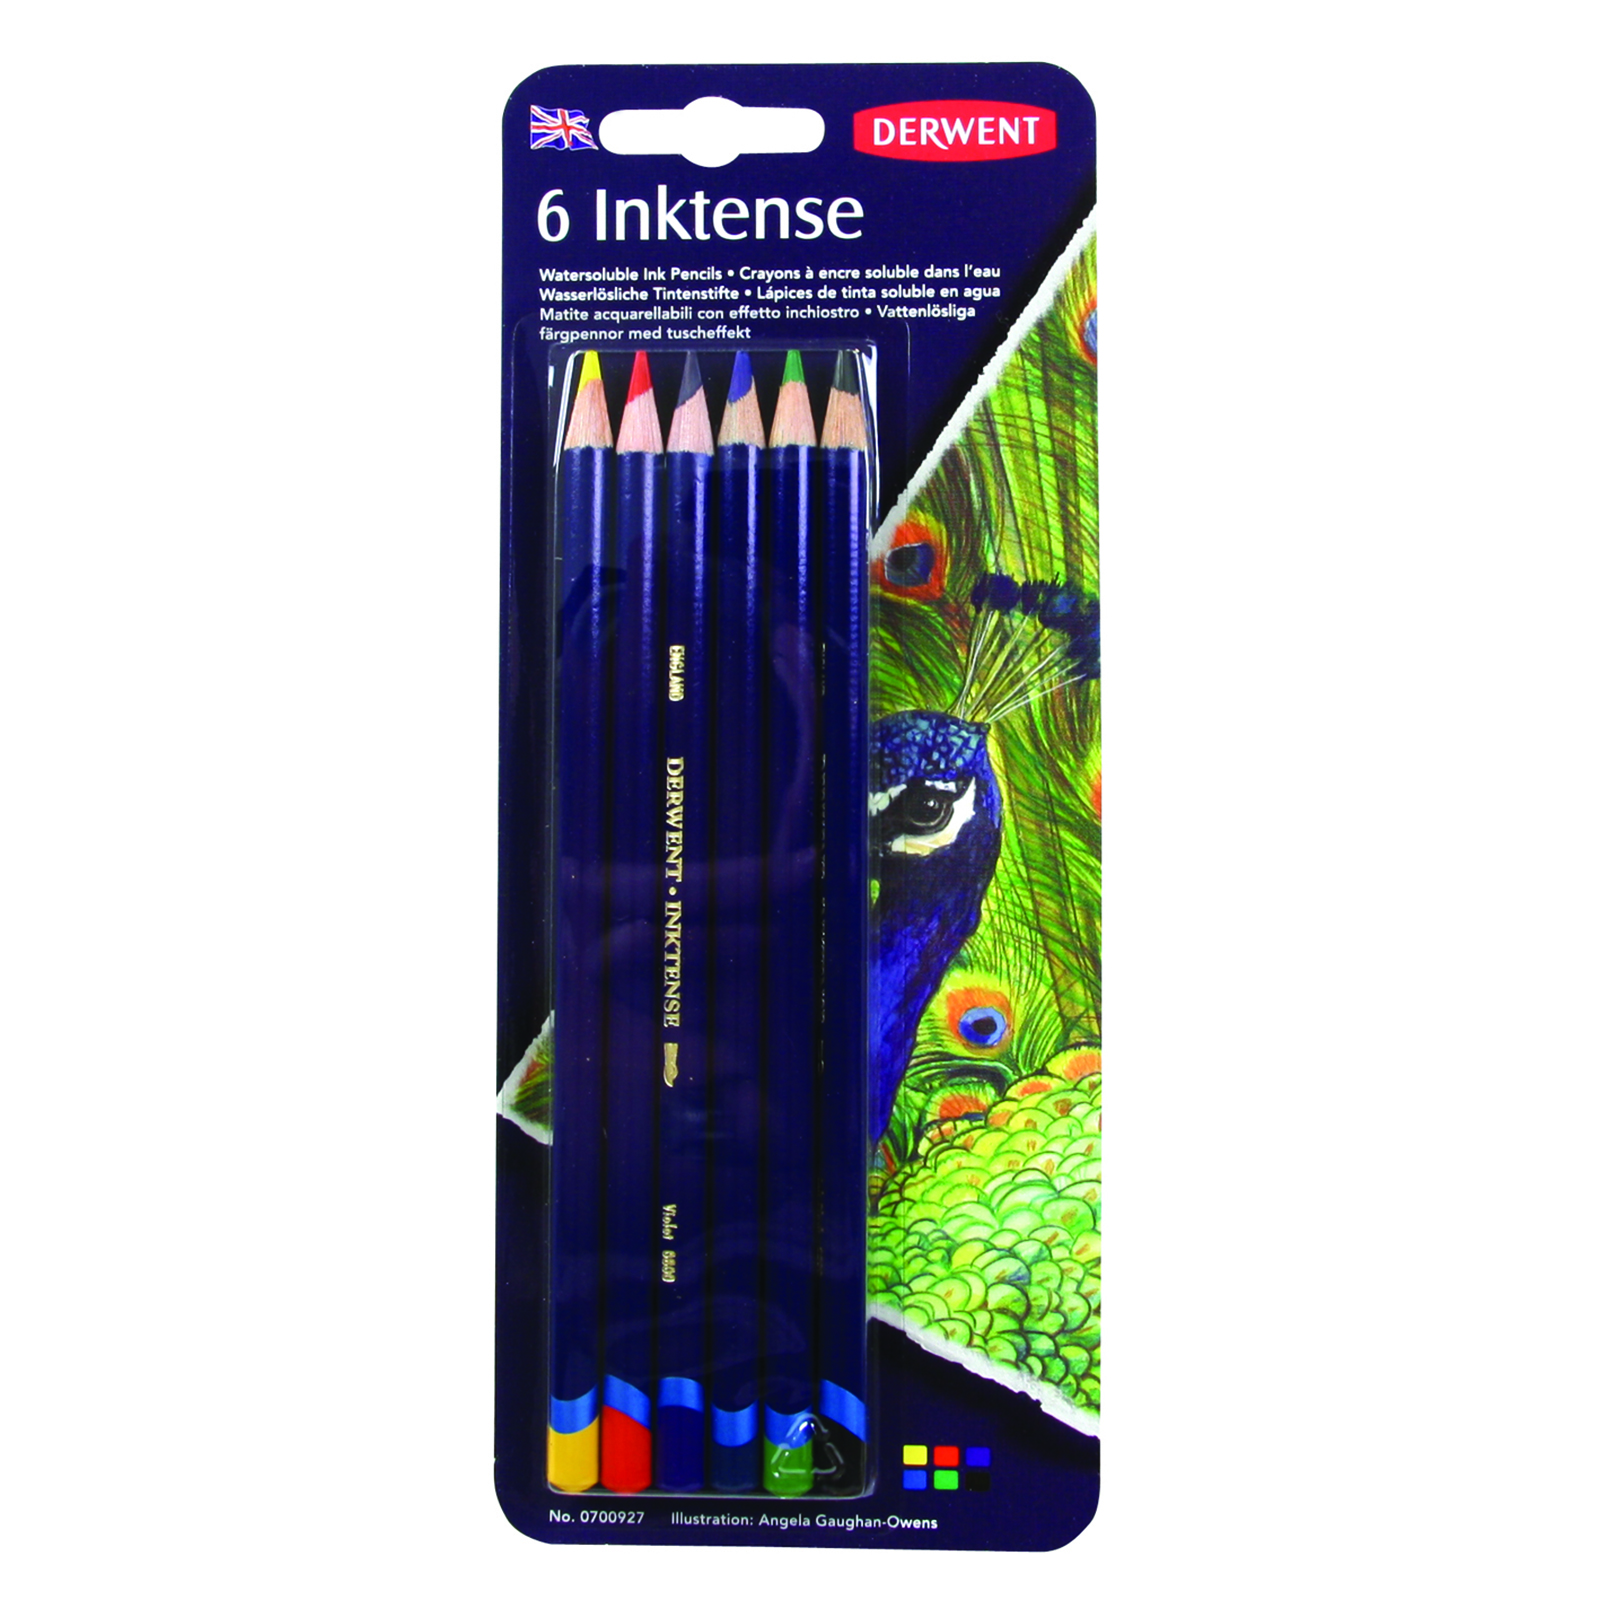 Derwent® Inktense Pencil 6 Color Set